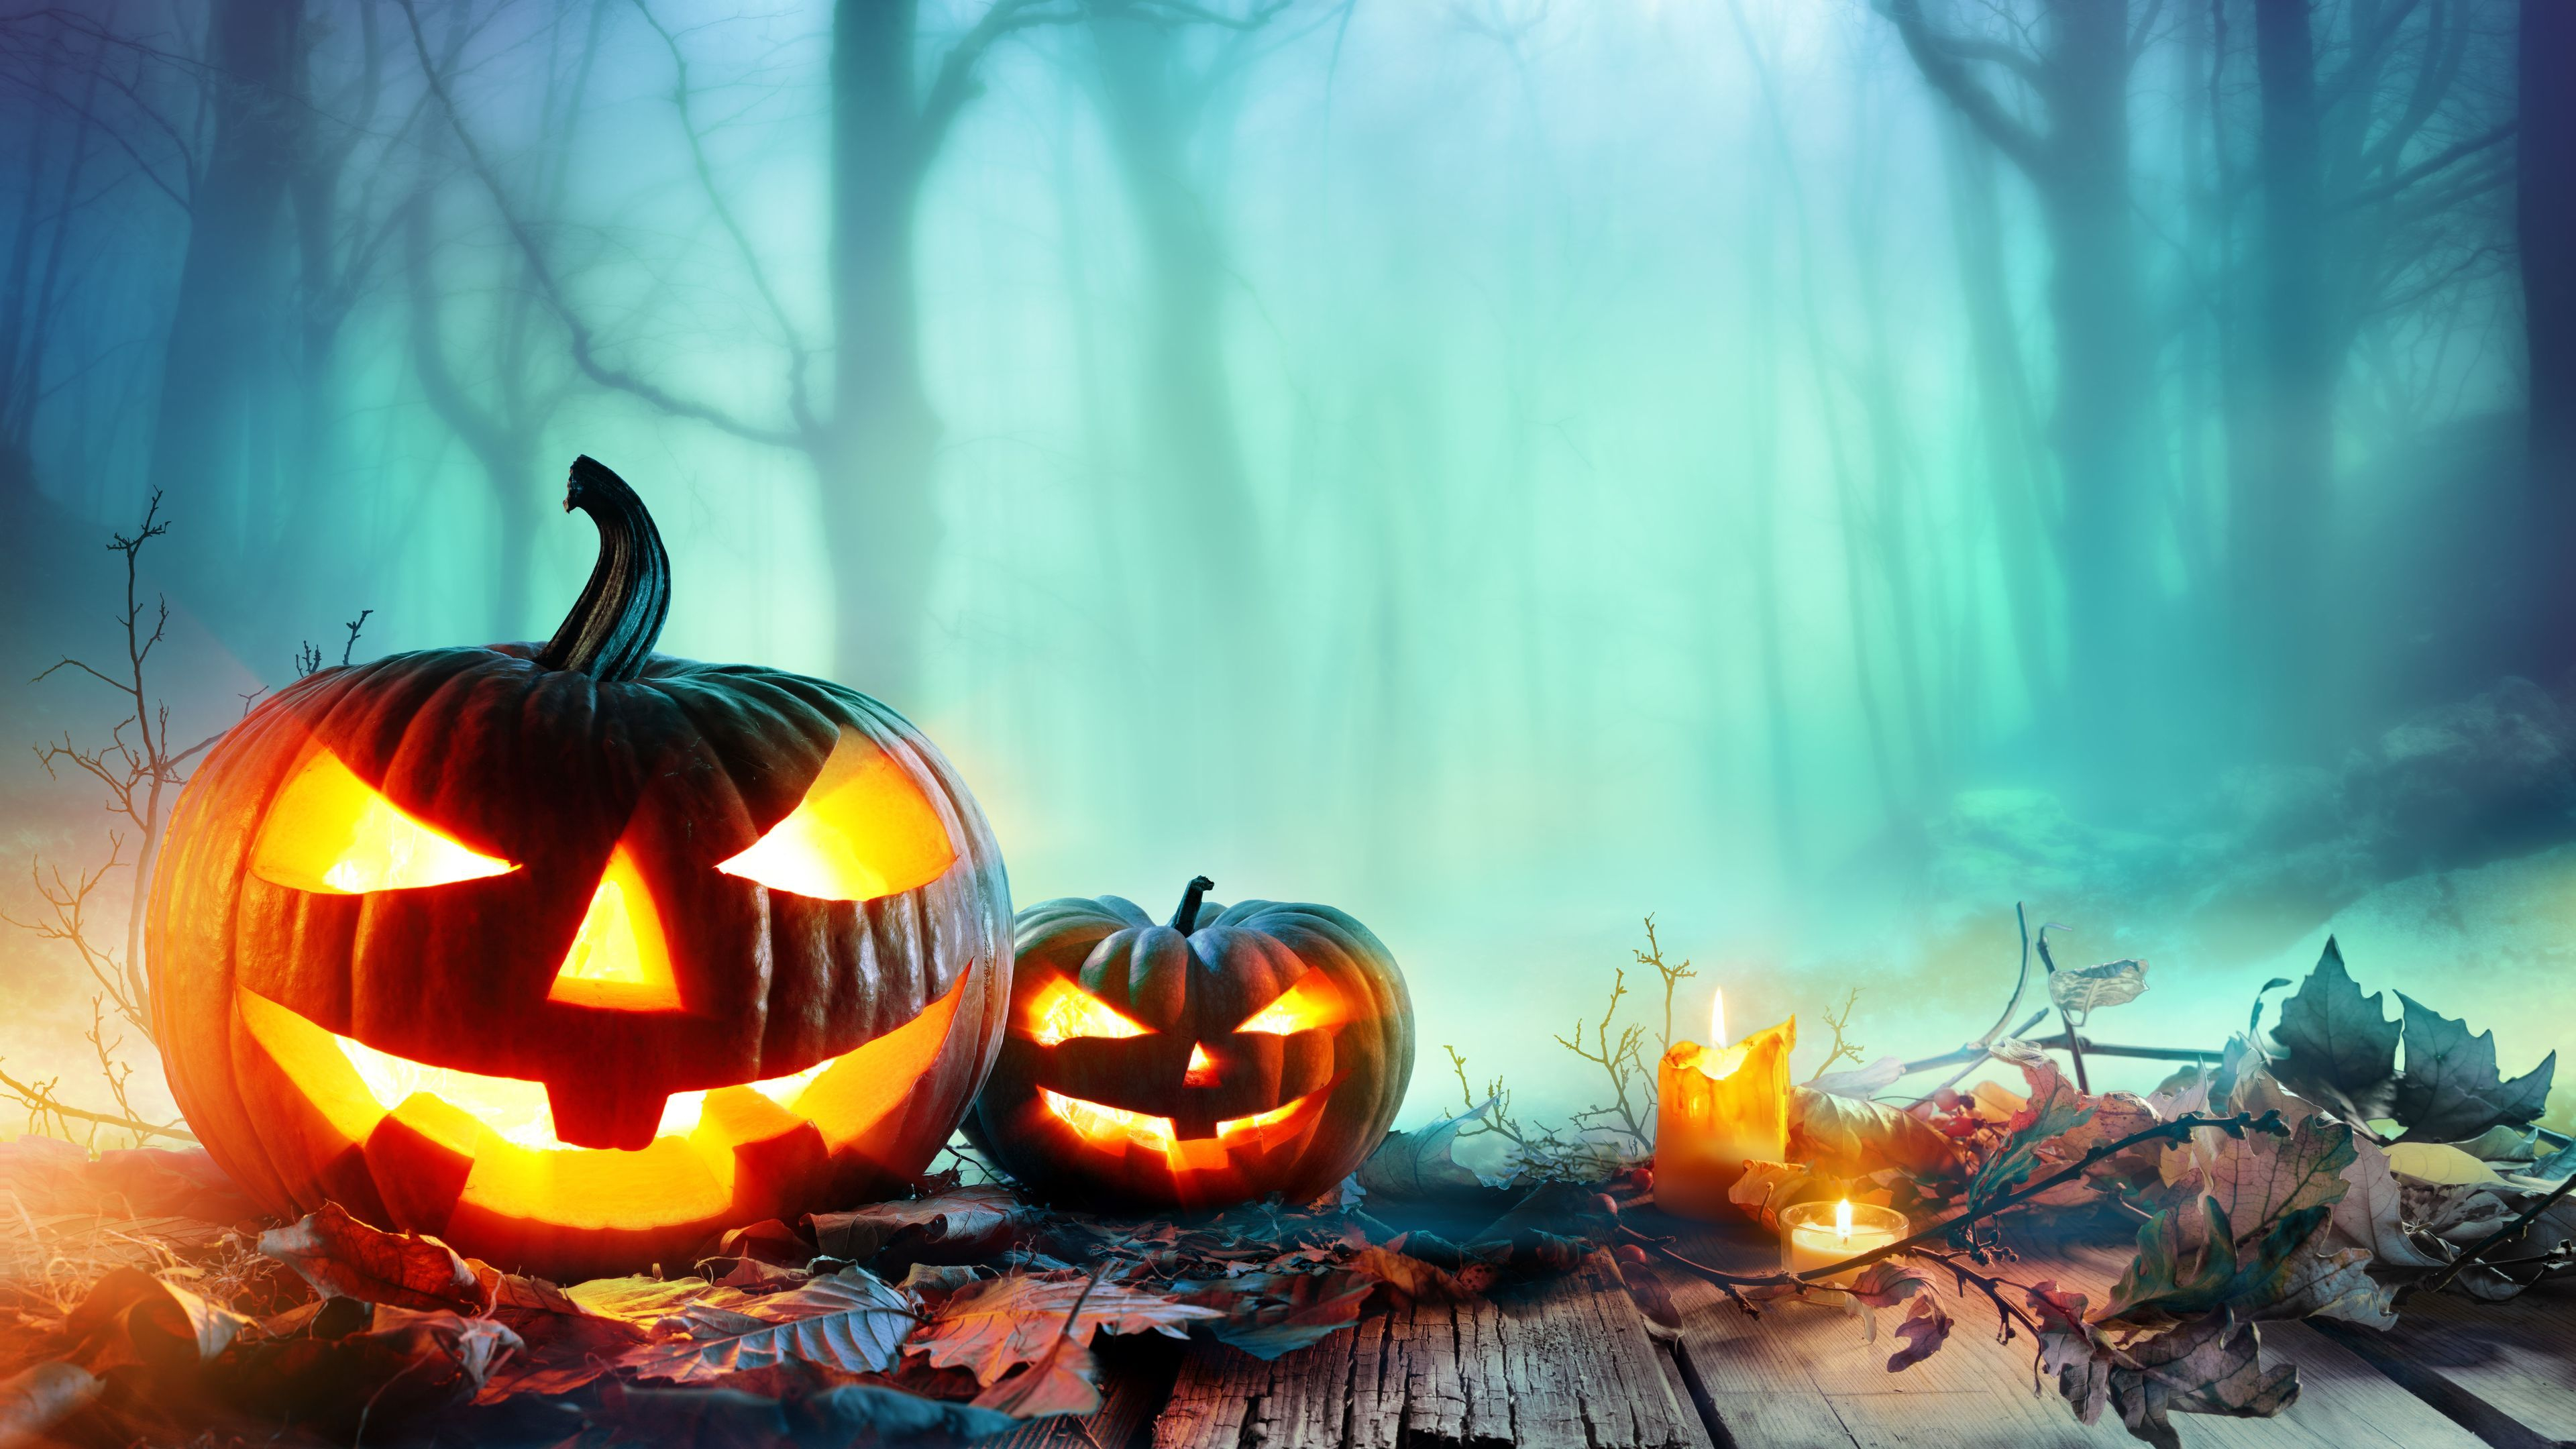 3840x2160 4k new Halloween pumpkin wallpapers, holidays wallpapers, hd-wallpapers, halloween wallpapers, celebra&acirc;&#128;&brvbar; | Pumpkin wallpaper, Halloween backgrounds, Halloween images